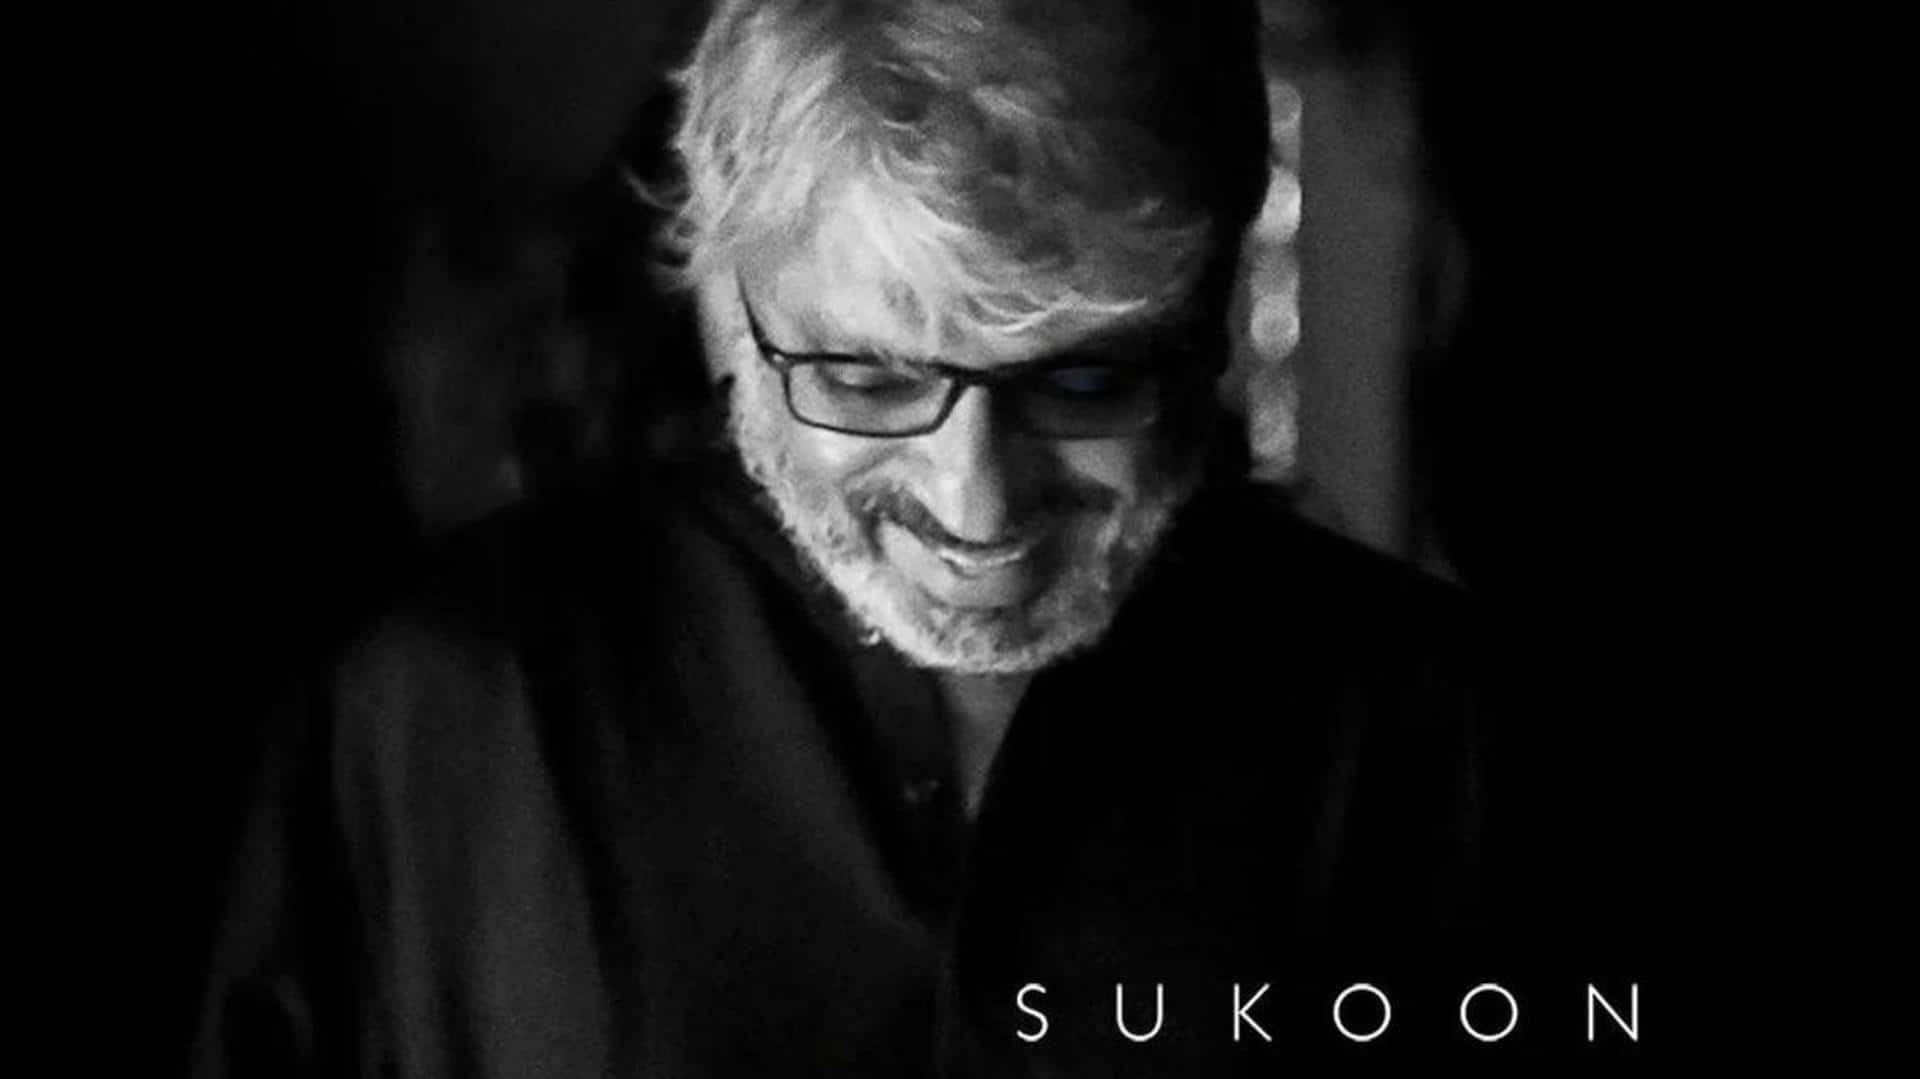 Sanjay Leela Bhansali's debut album 'Sukoon' releases this Wednesday